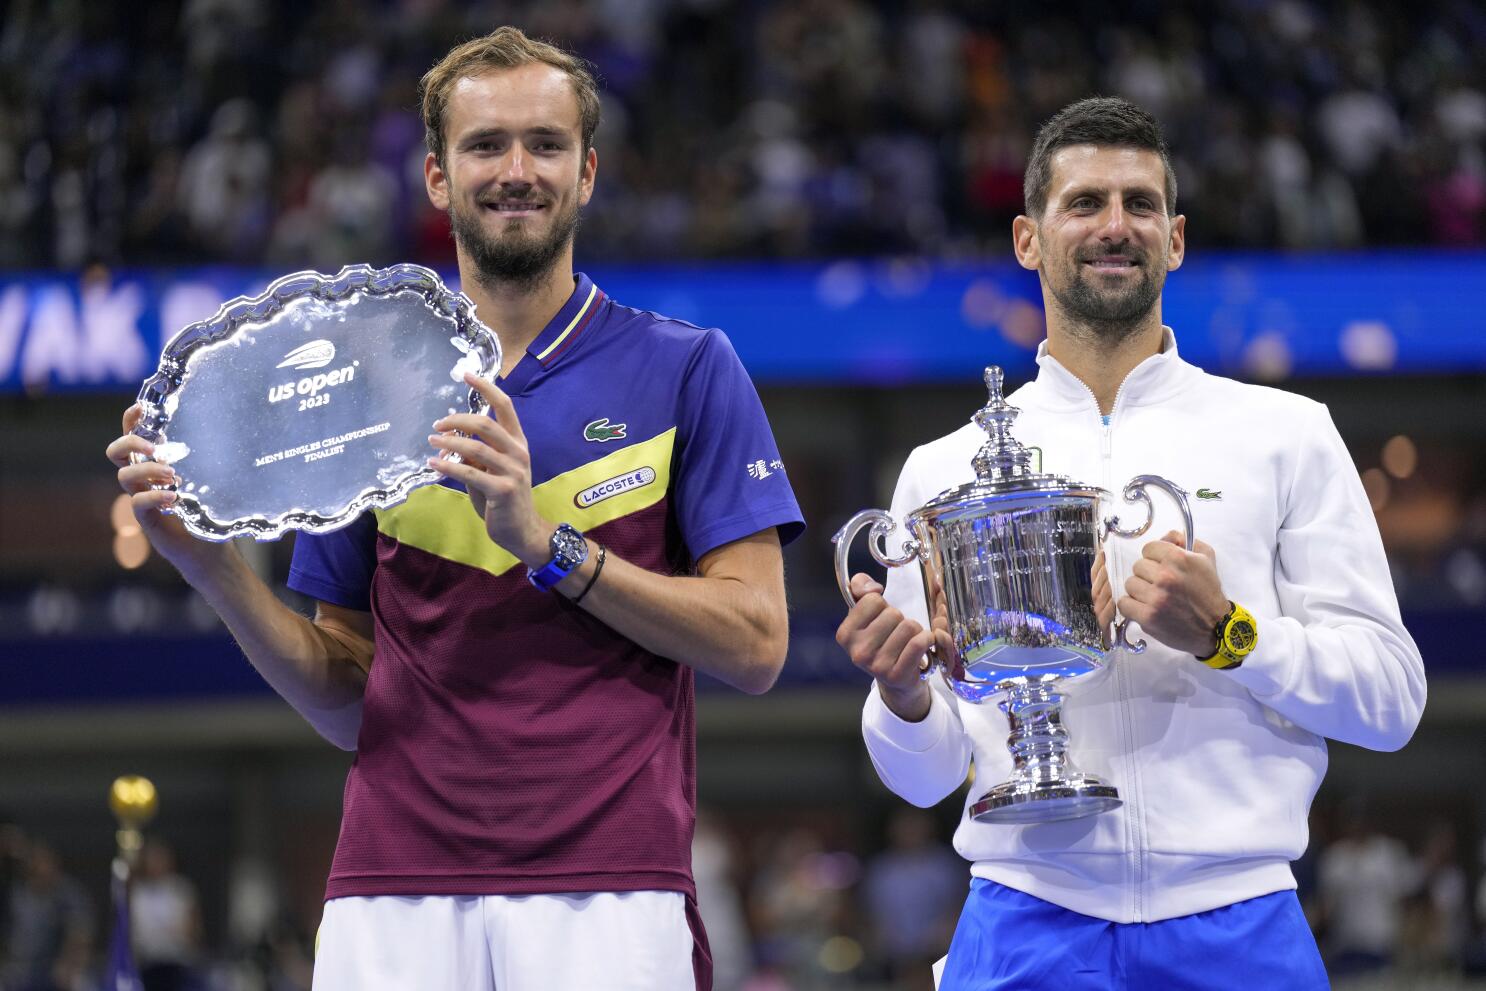 A look at each of Novak Djokovic's 2021 Grand Slam matches